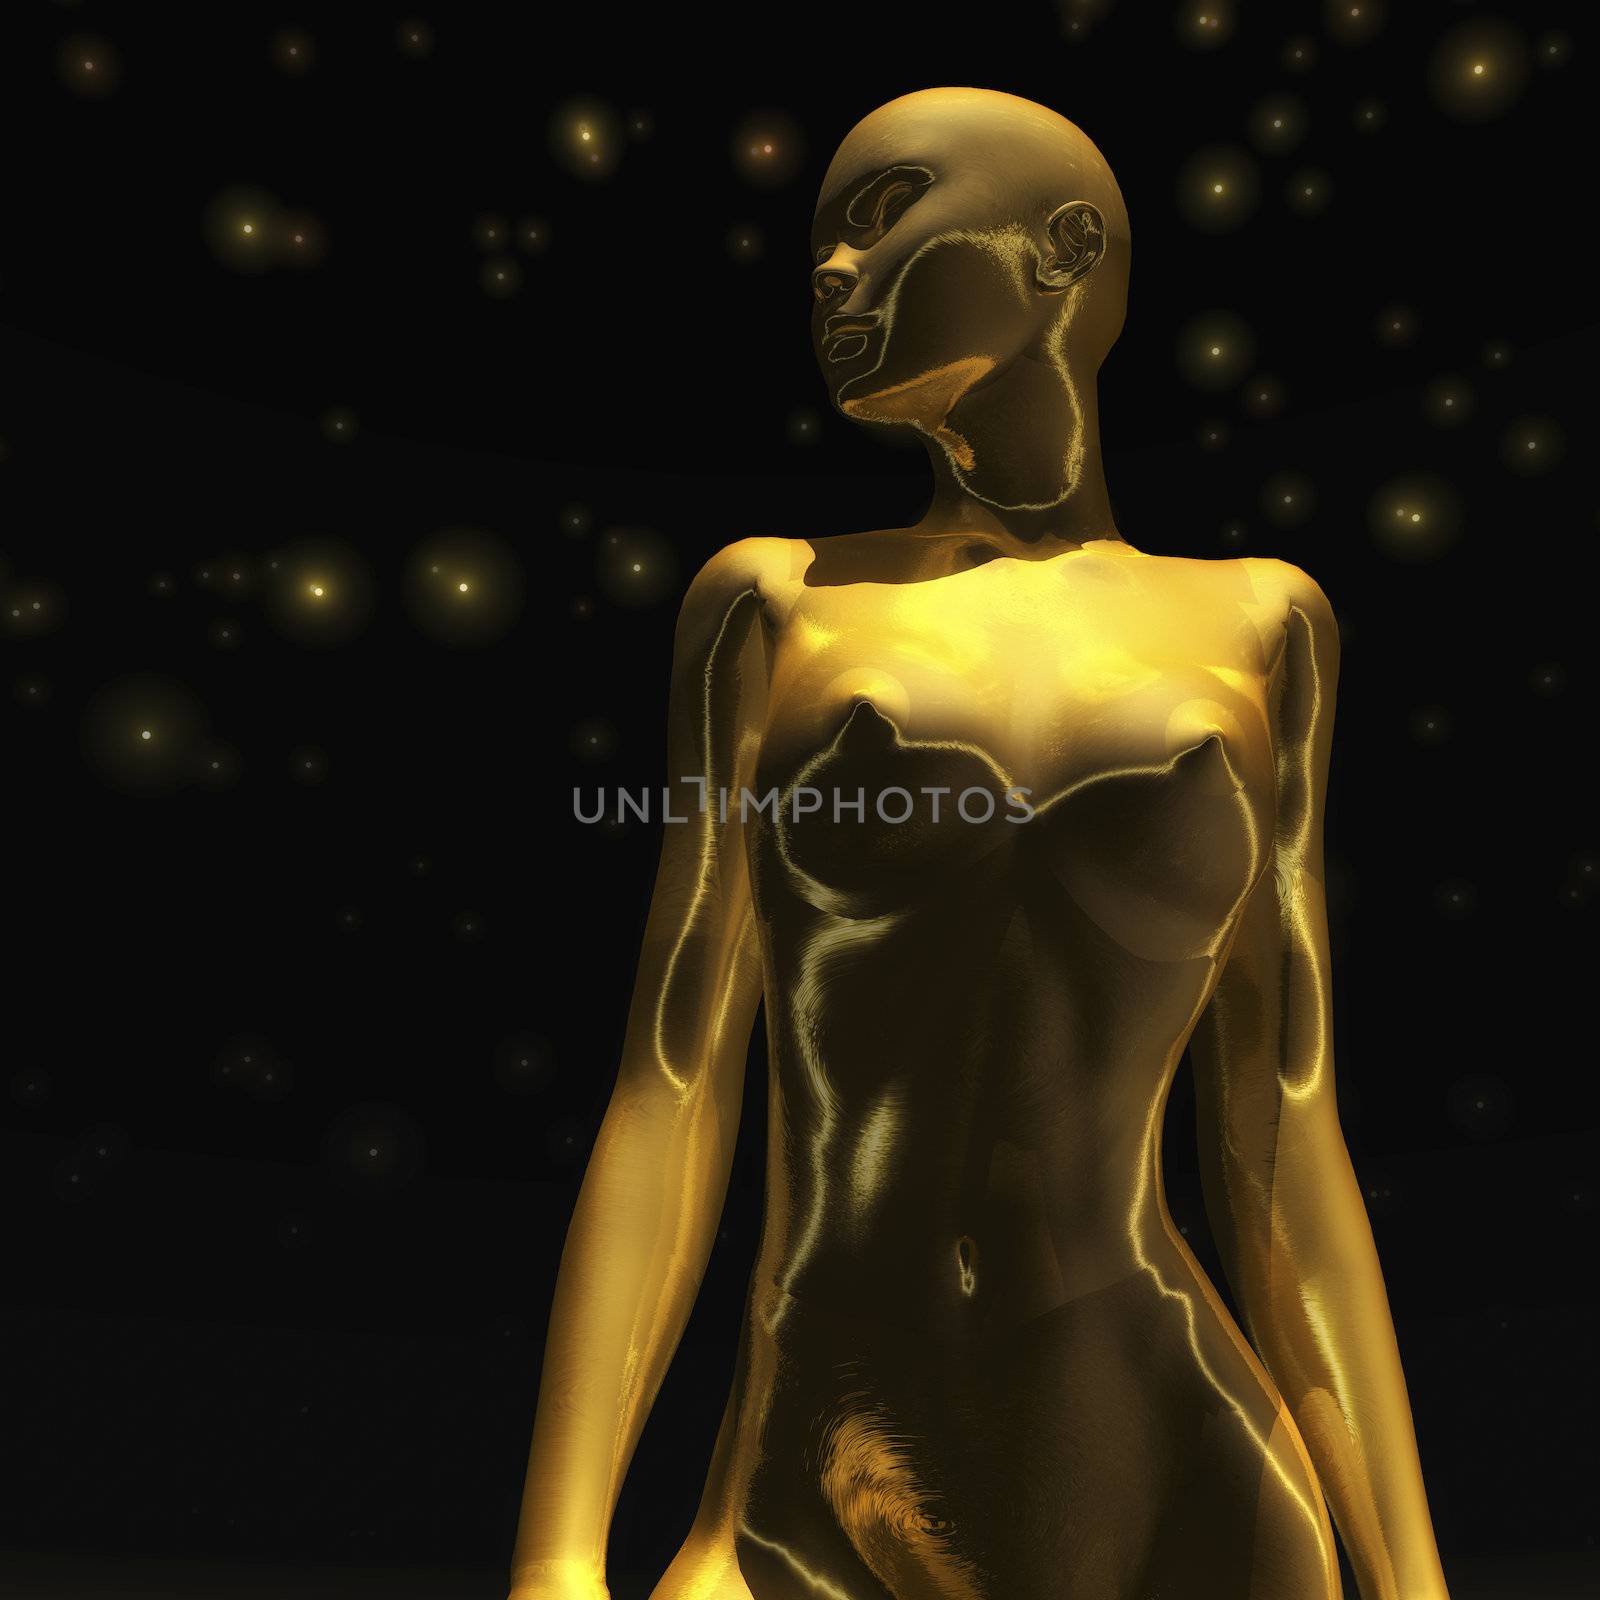 Digital visualization of a cosmic girl